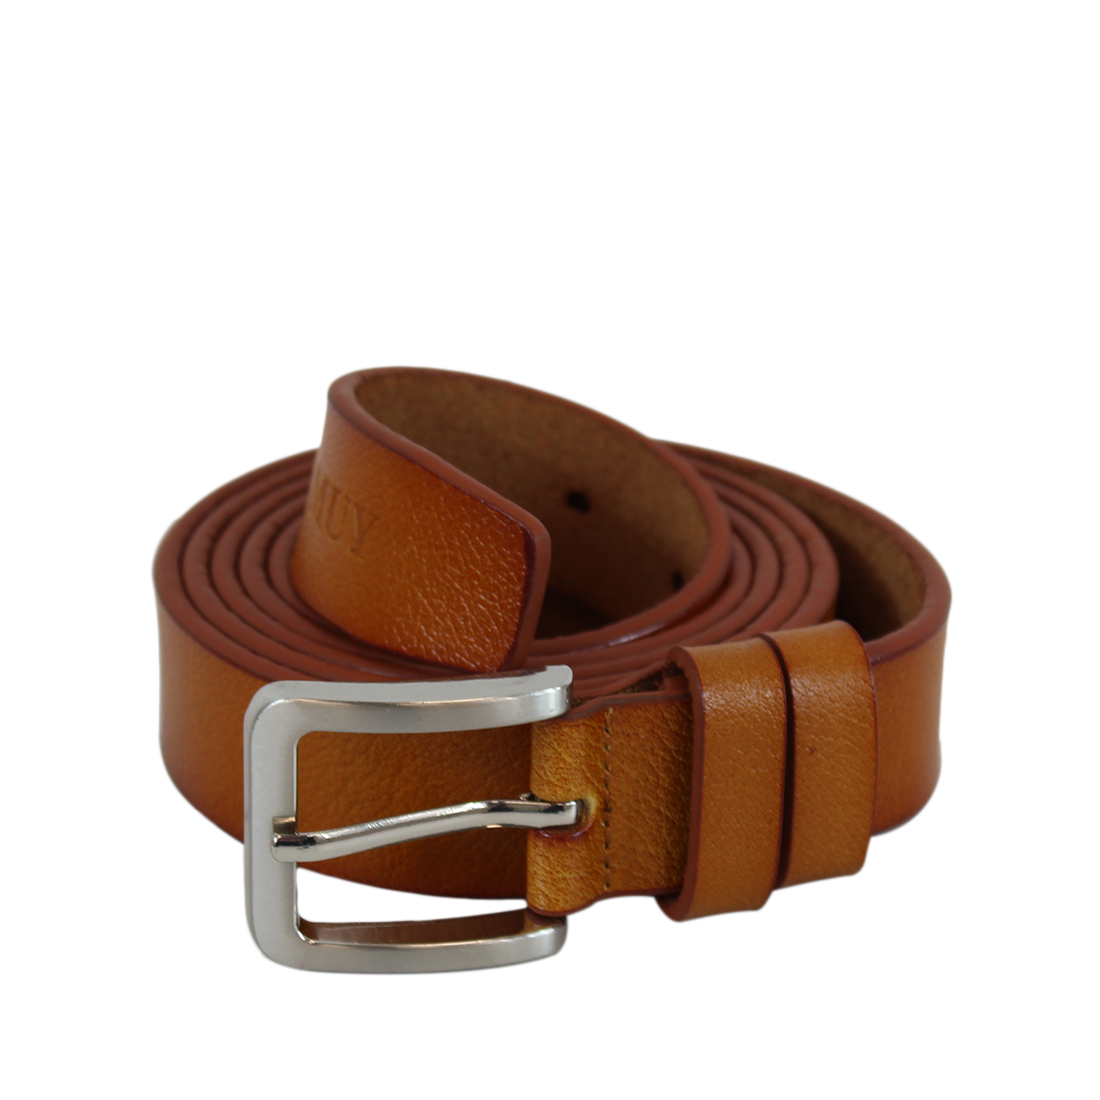 Real leather narrow plain belt